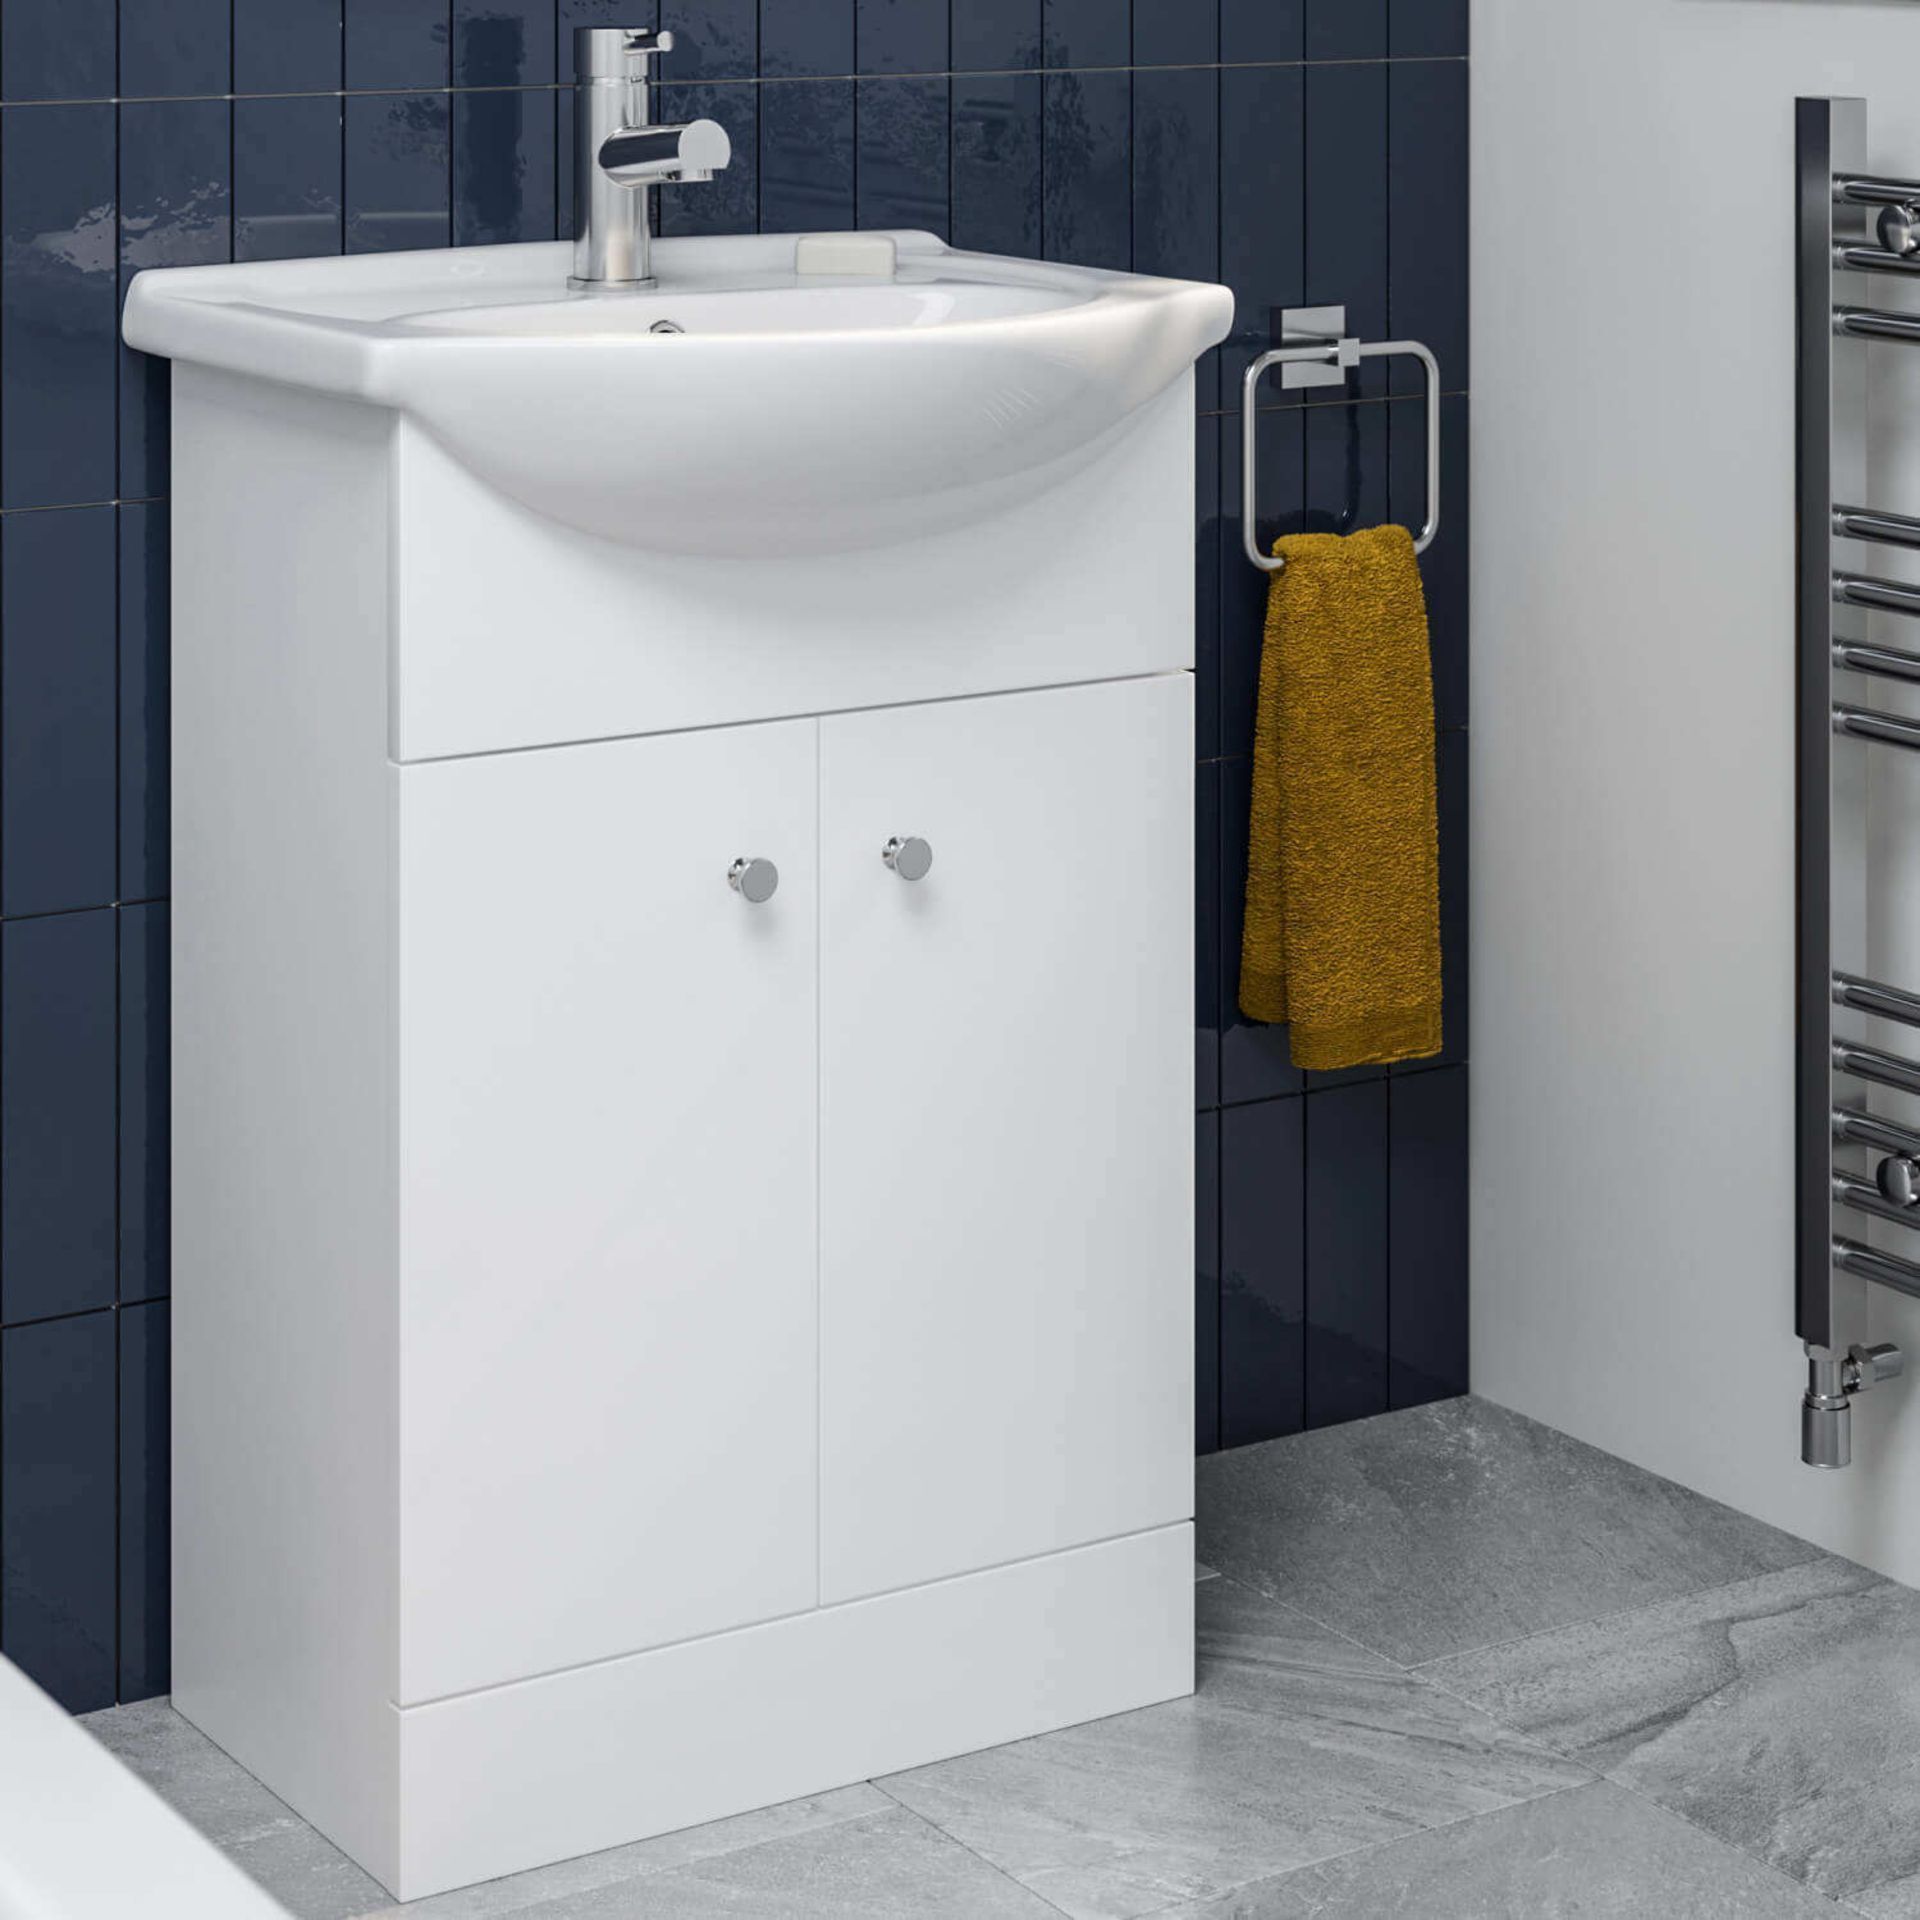 BRAND NEW BOXED 550mm Quartz Basin Sink Vanity Unit Floor Standing White.RRP £349.99.Comes com... - Image 2 of 3